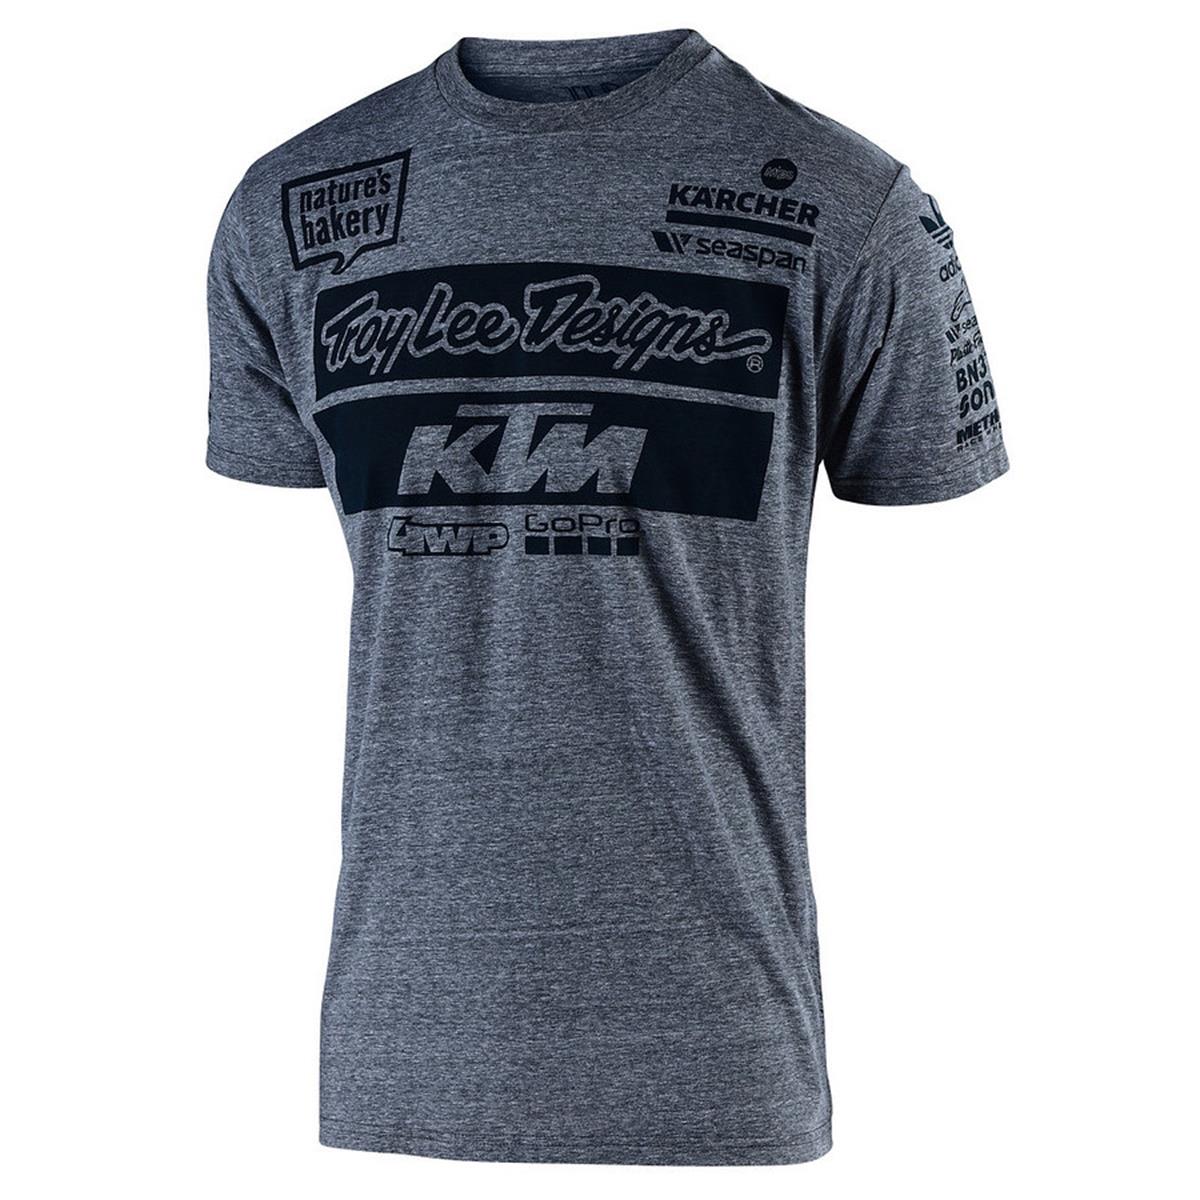 Troy Lee Designs T-Shirt KTM Team Vintage Grey Snow